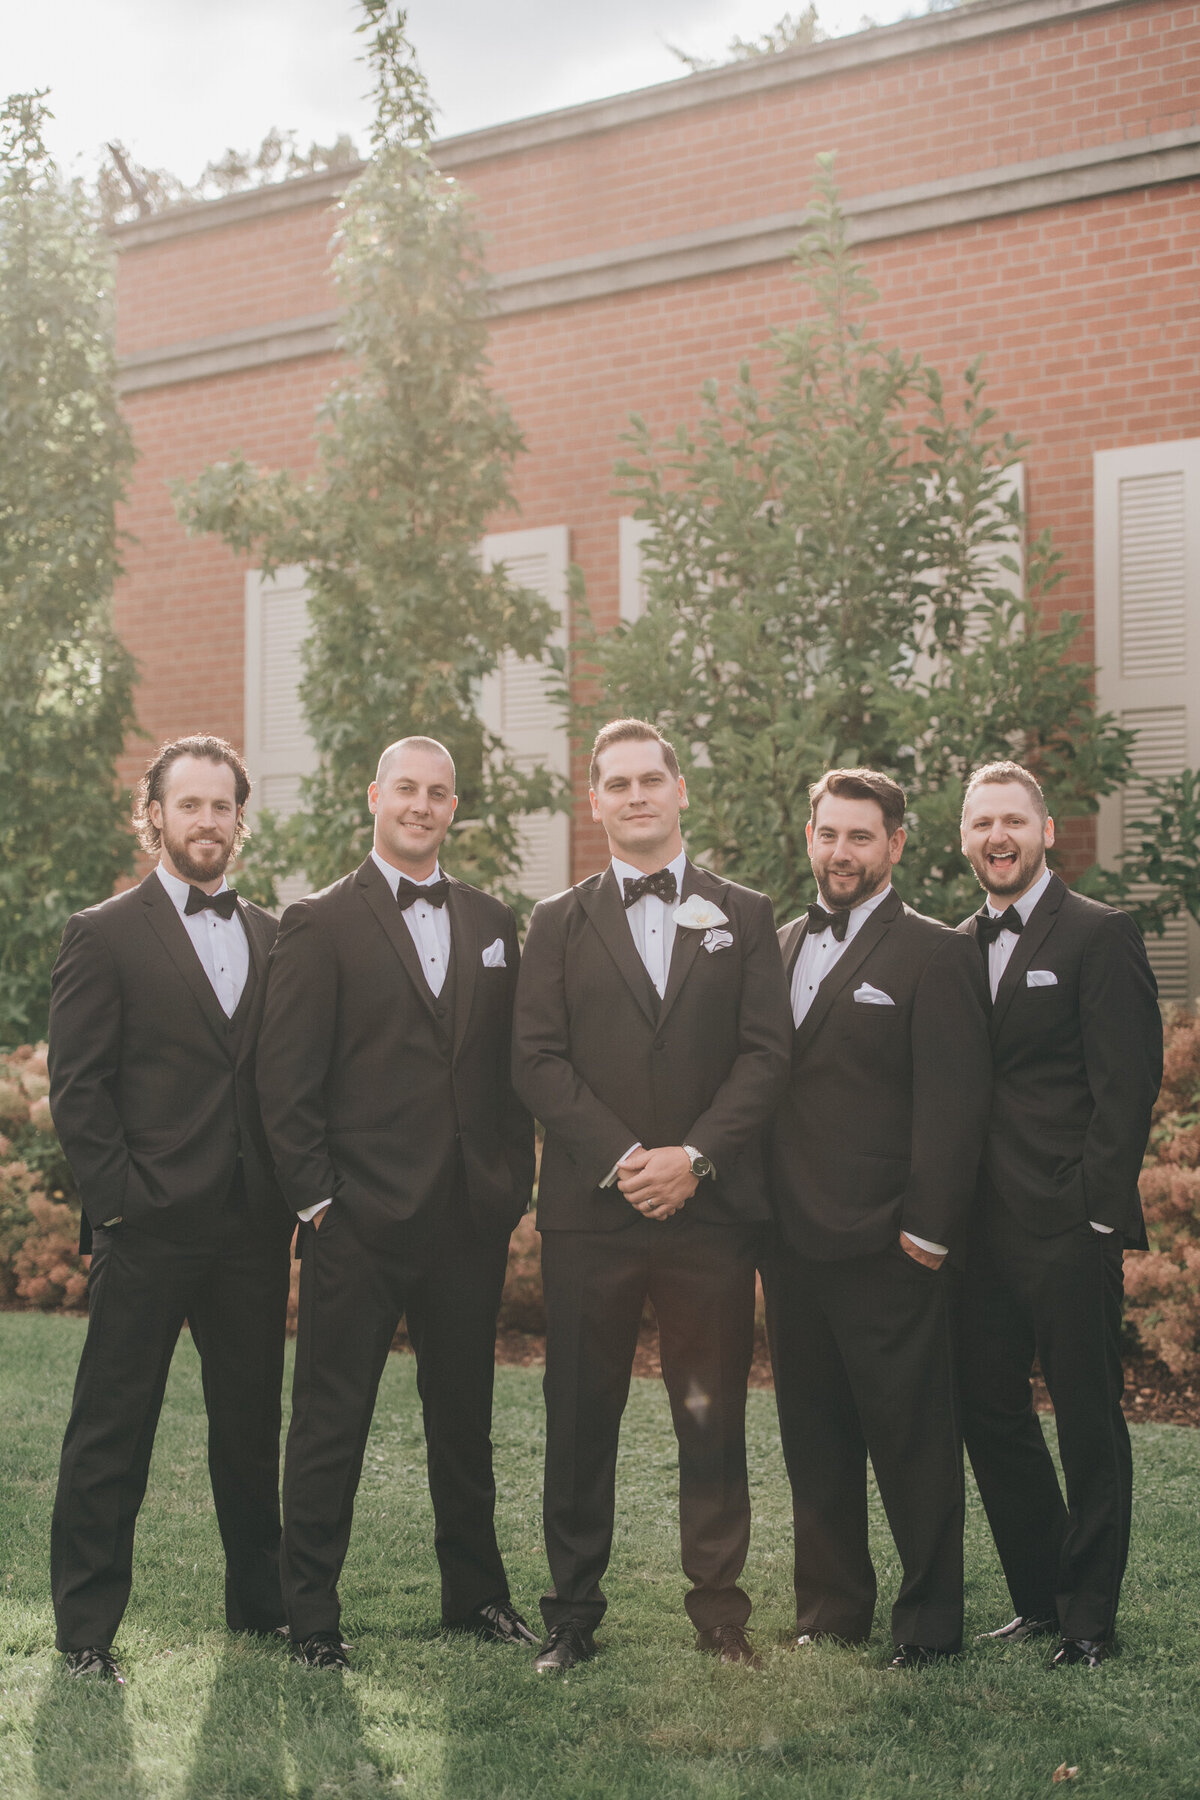 Groomsmen in black tuxedos for traditional groomsmen photos